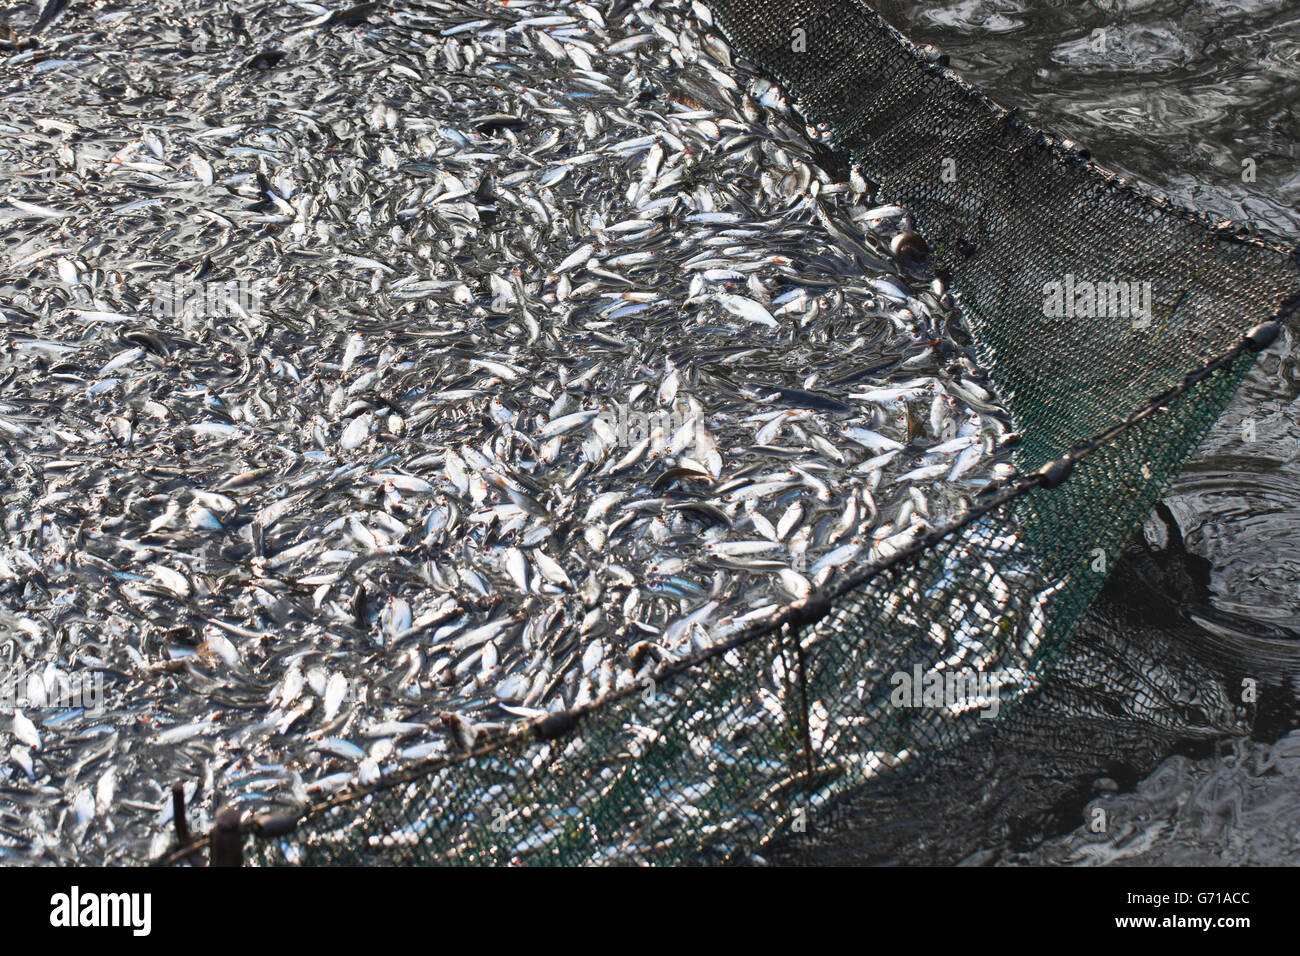 Small fish in fishing net, Stradower Teiche, Vetschau, Spreewald,  Brandenburg, Germany Stock Photo - Alamy